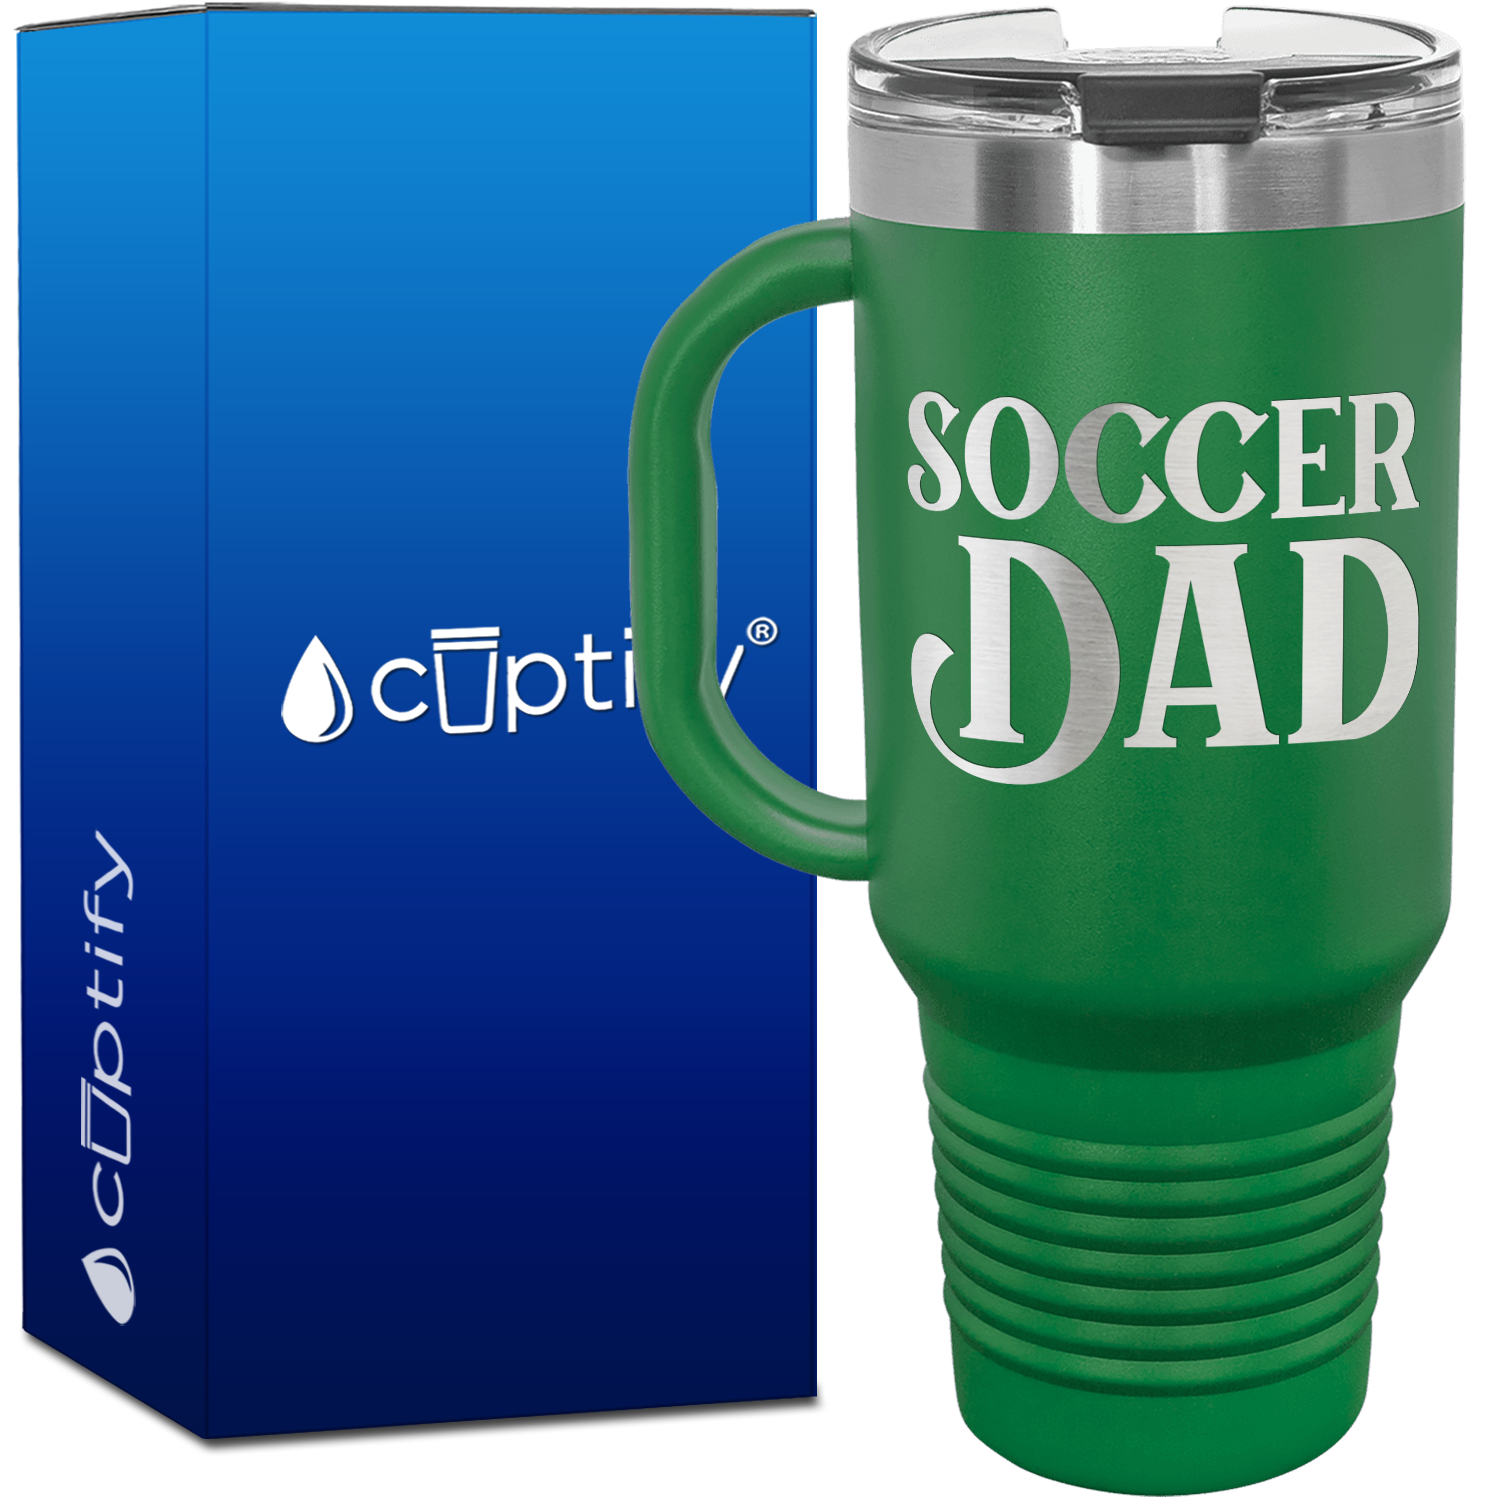 Soccer Dad 40oz Soccer Travel Mug